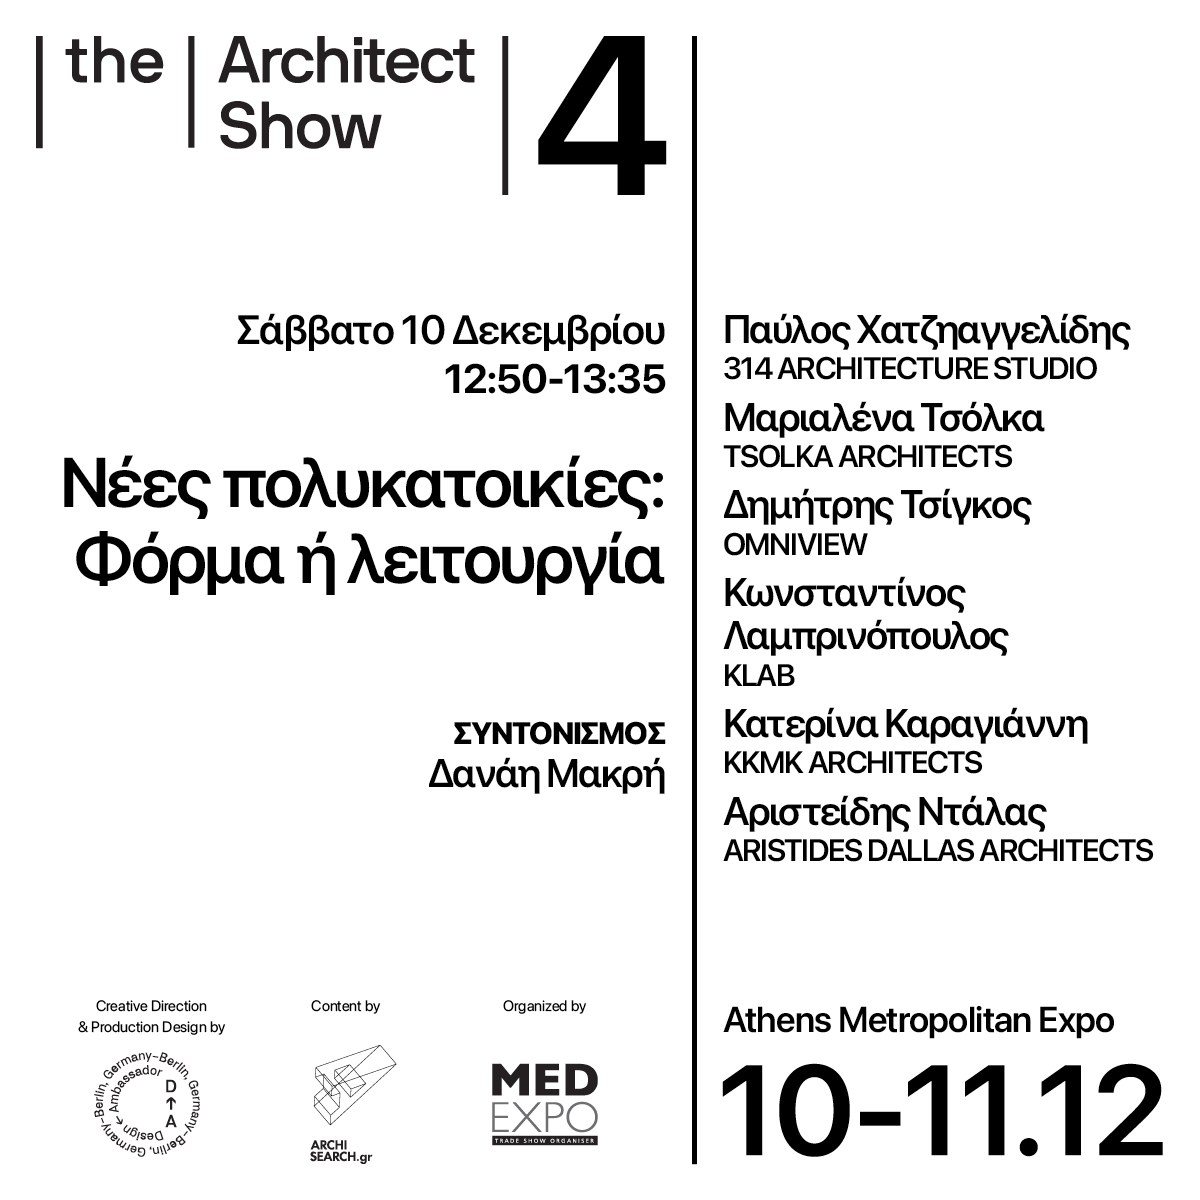 Archisearch The Architect Show 4 _ 'Fast forward', 10&11 Δεκεμβρίου 2022, Metropolitan Expo: τι θα δούμε στο διήμερο συνέδριο που αναμένεται να αποτελέσει μία ανάσα δημιουργικής ανταλλαγής γνώσεων και ιδεών